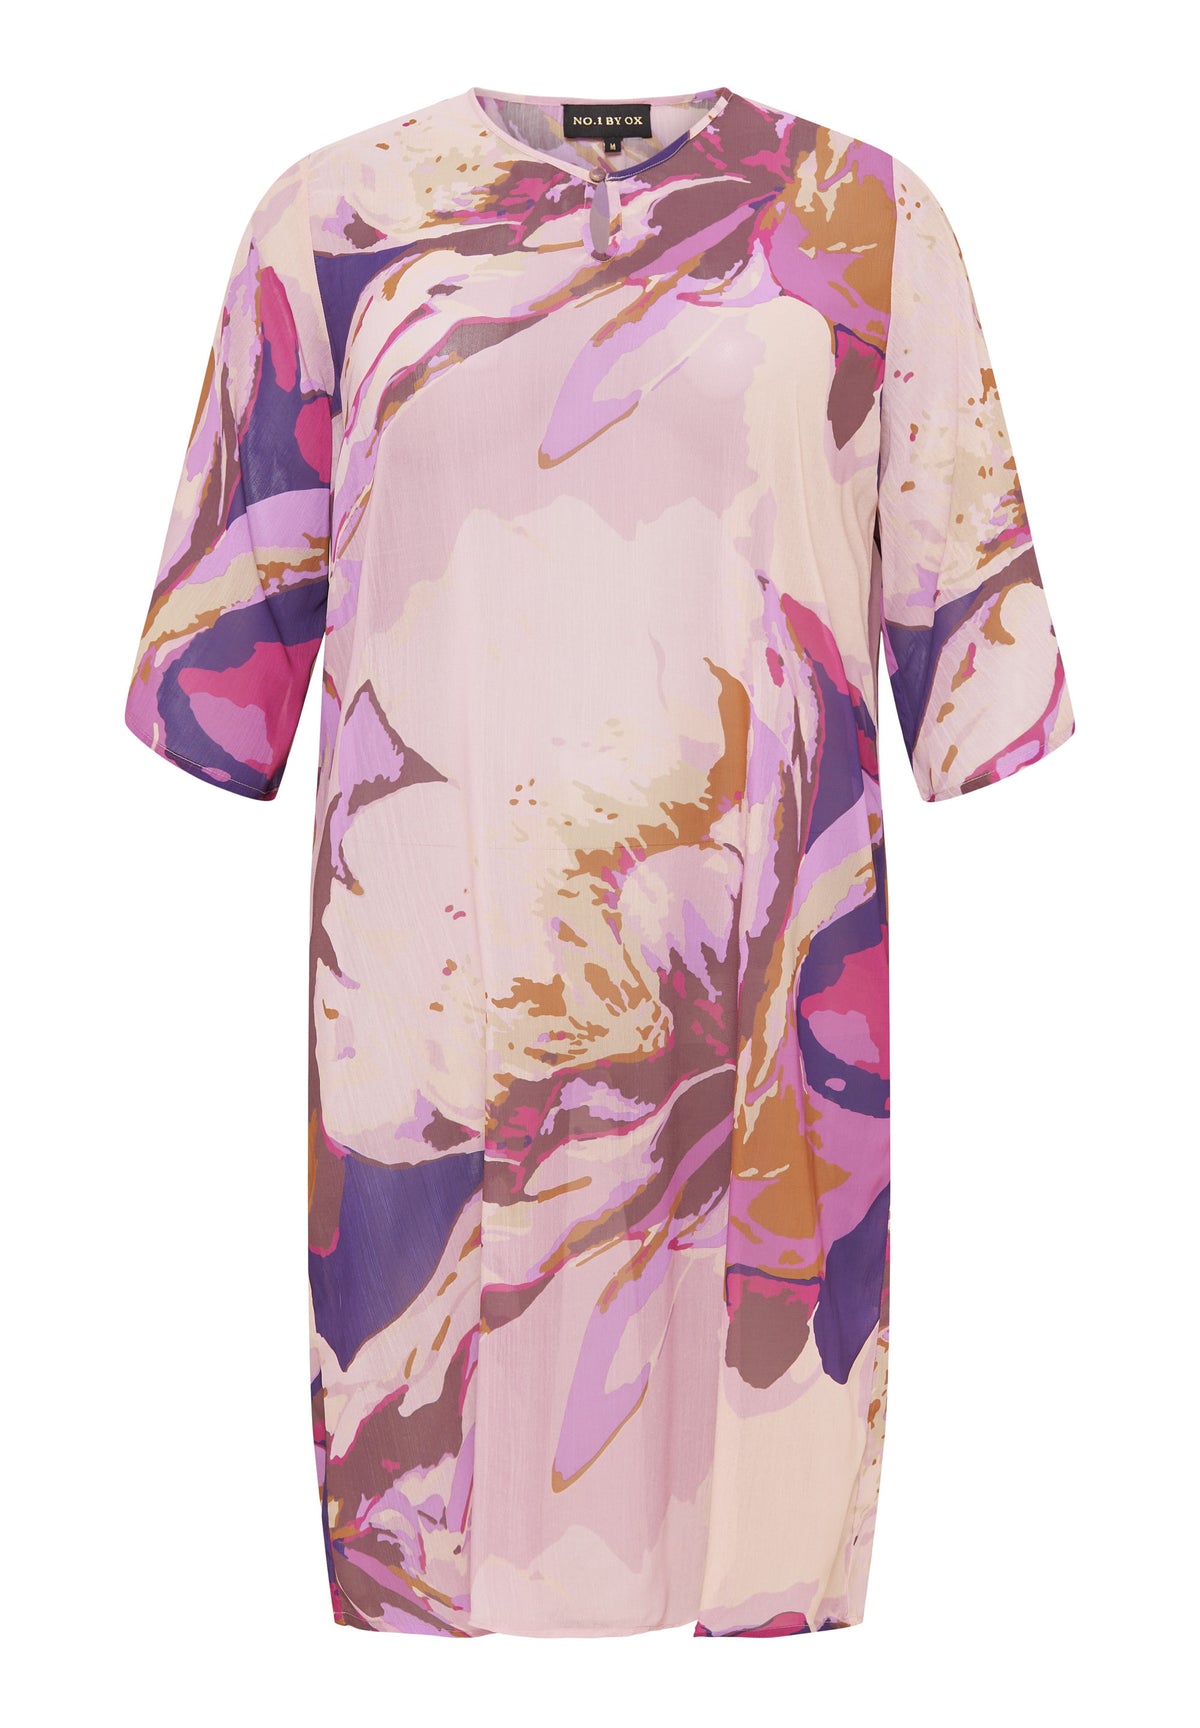 NO. 1 BY OX Chiffon kjole i et smukt print Kjoler Rose w Dark Purple Flowers